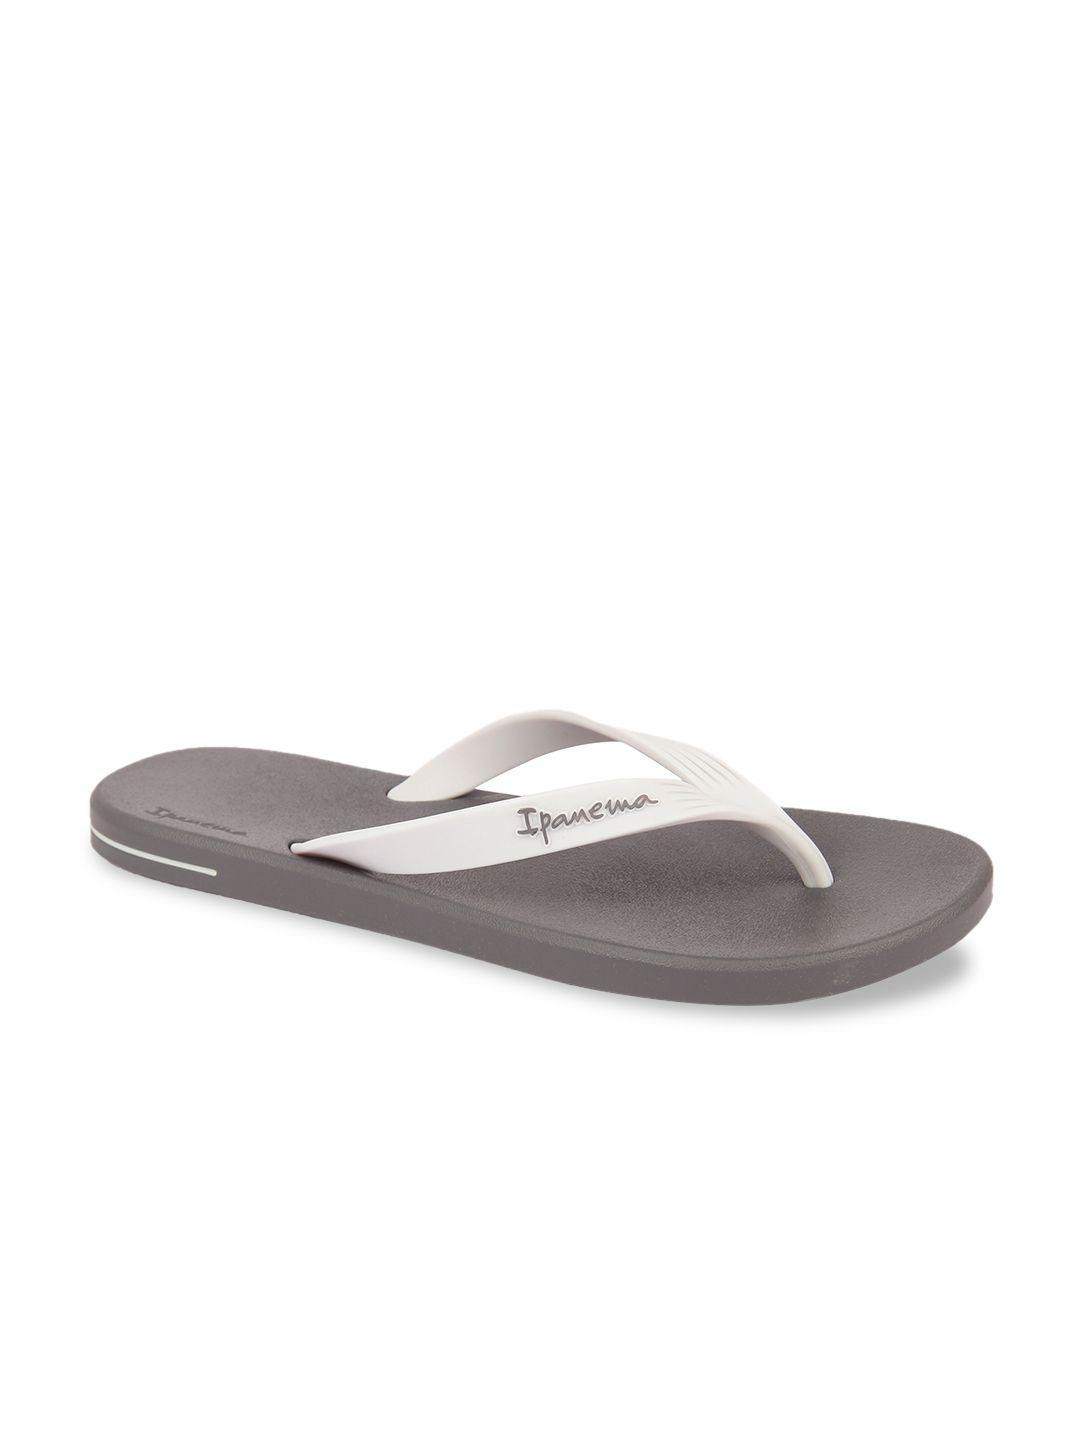 ipanema-men-off-white-&-grey-solid-thong-flip-flops